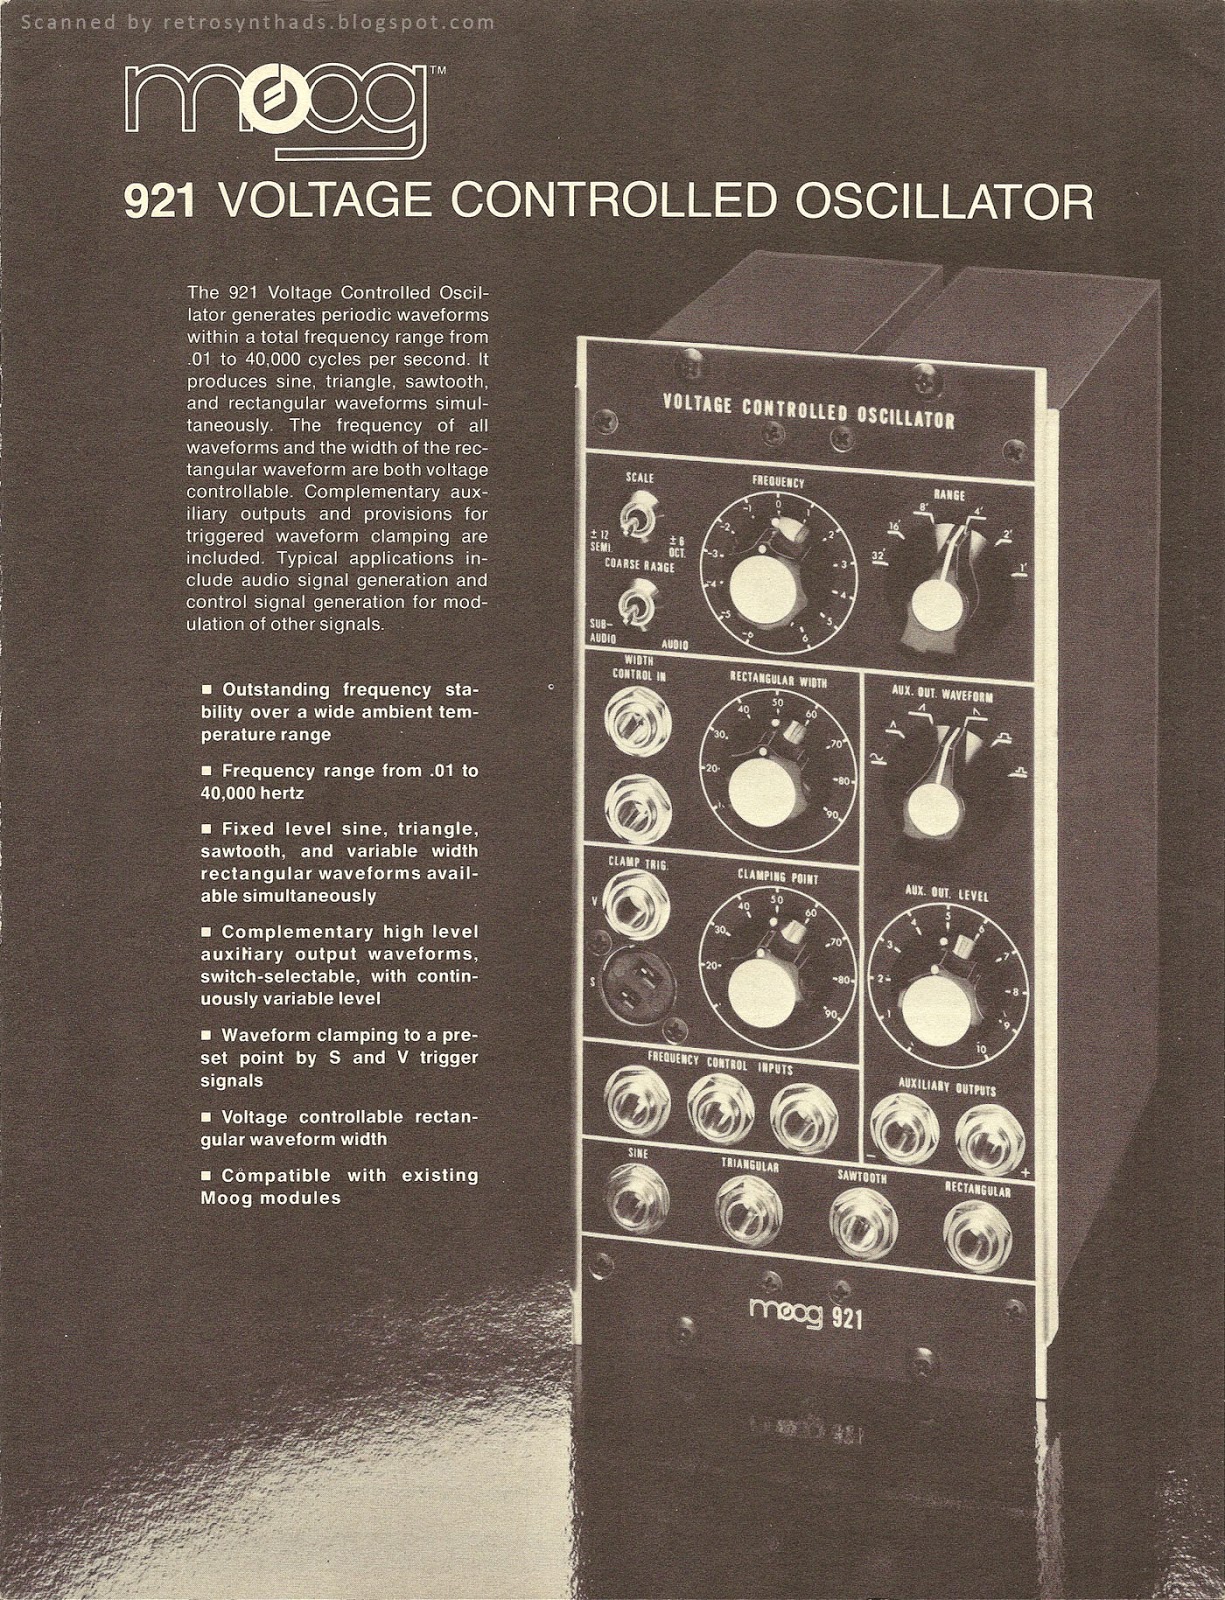 http://retrosynthads.blogspot.ca/2014/09/moog-921-voltage-controlled-oscillator.html